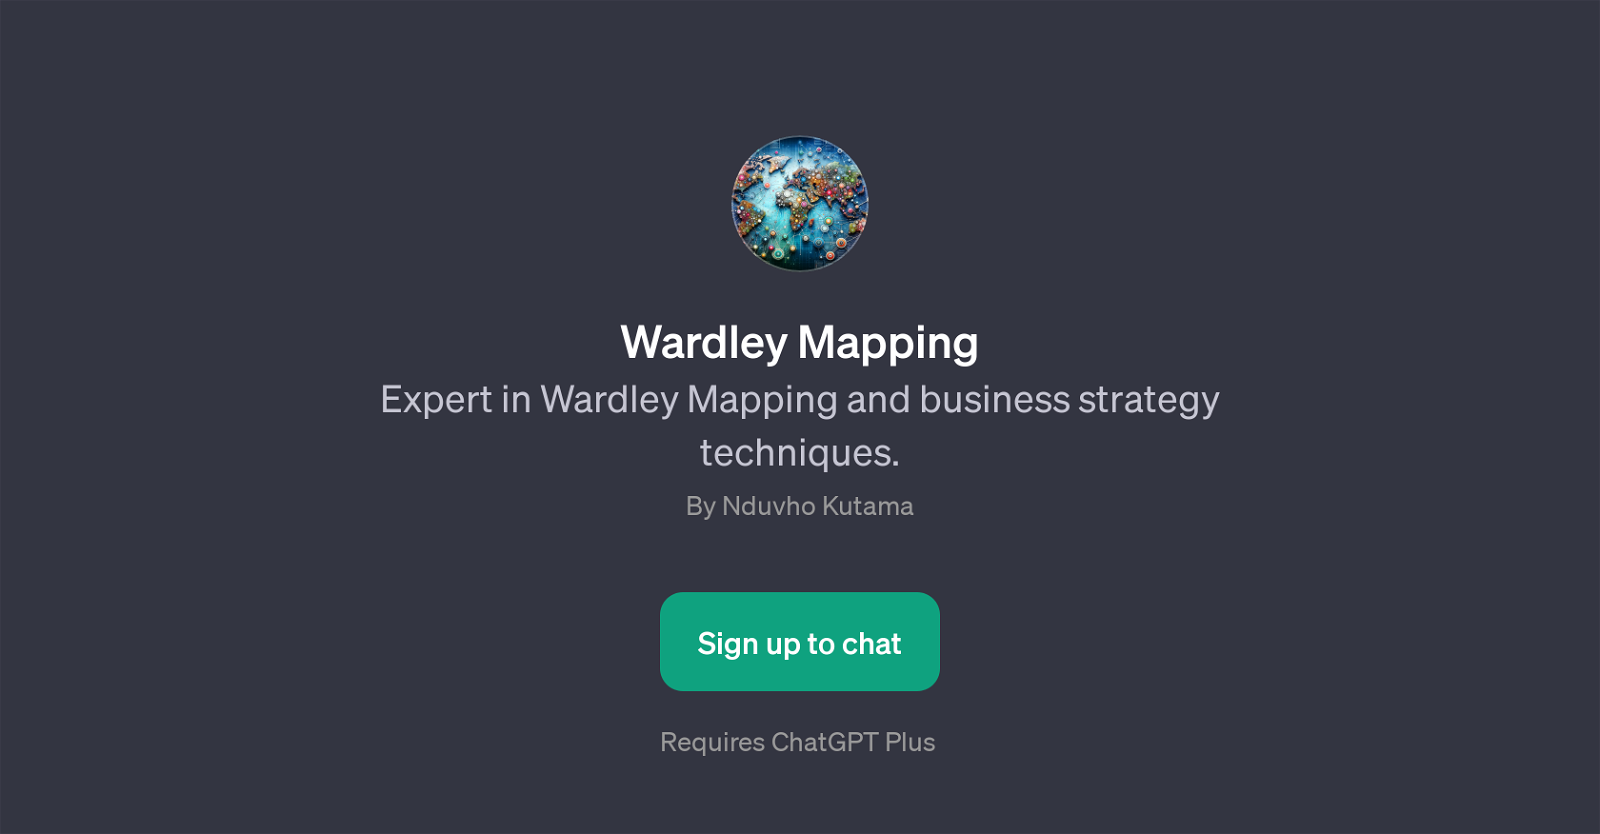 Wardley Mapping website